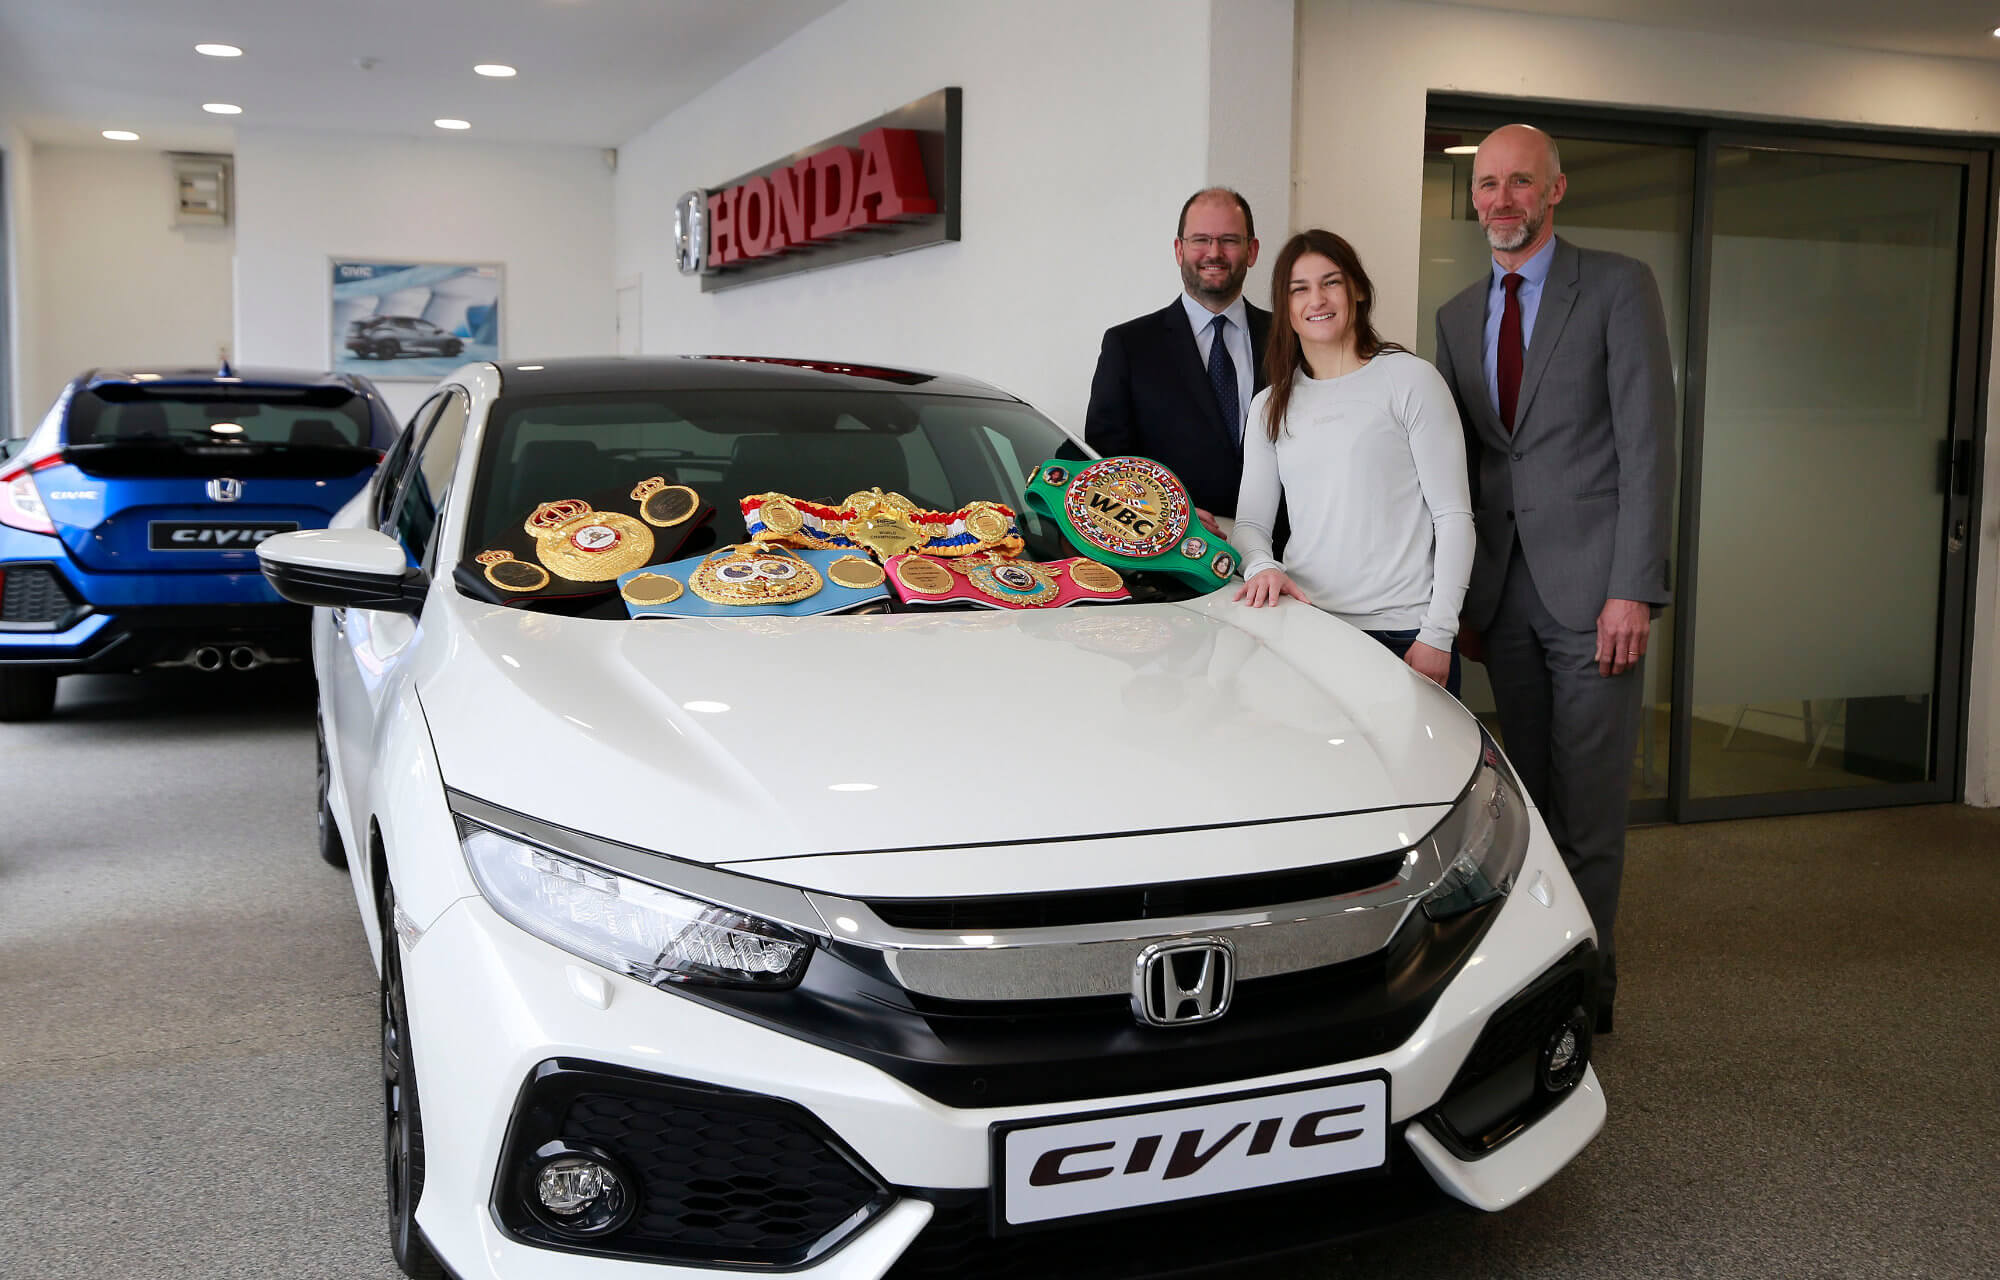 Honda brand ambassador Katie Taylor collects her new Honda Civic